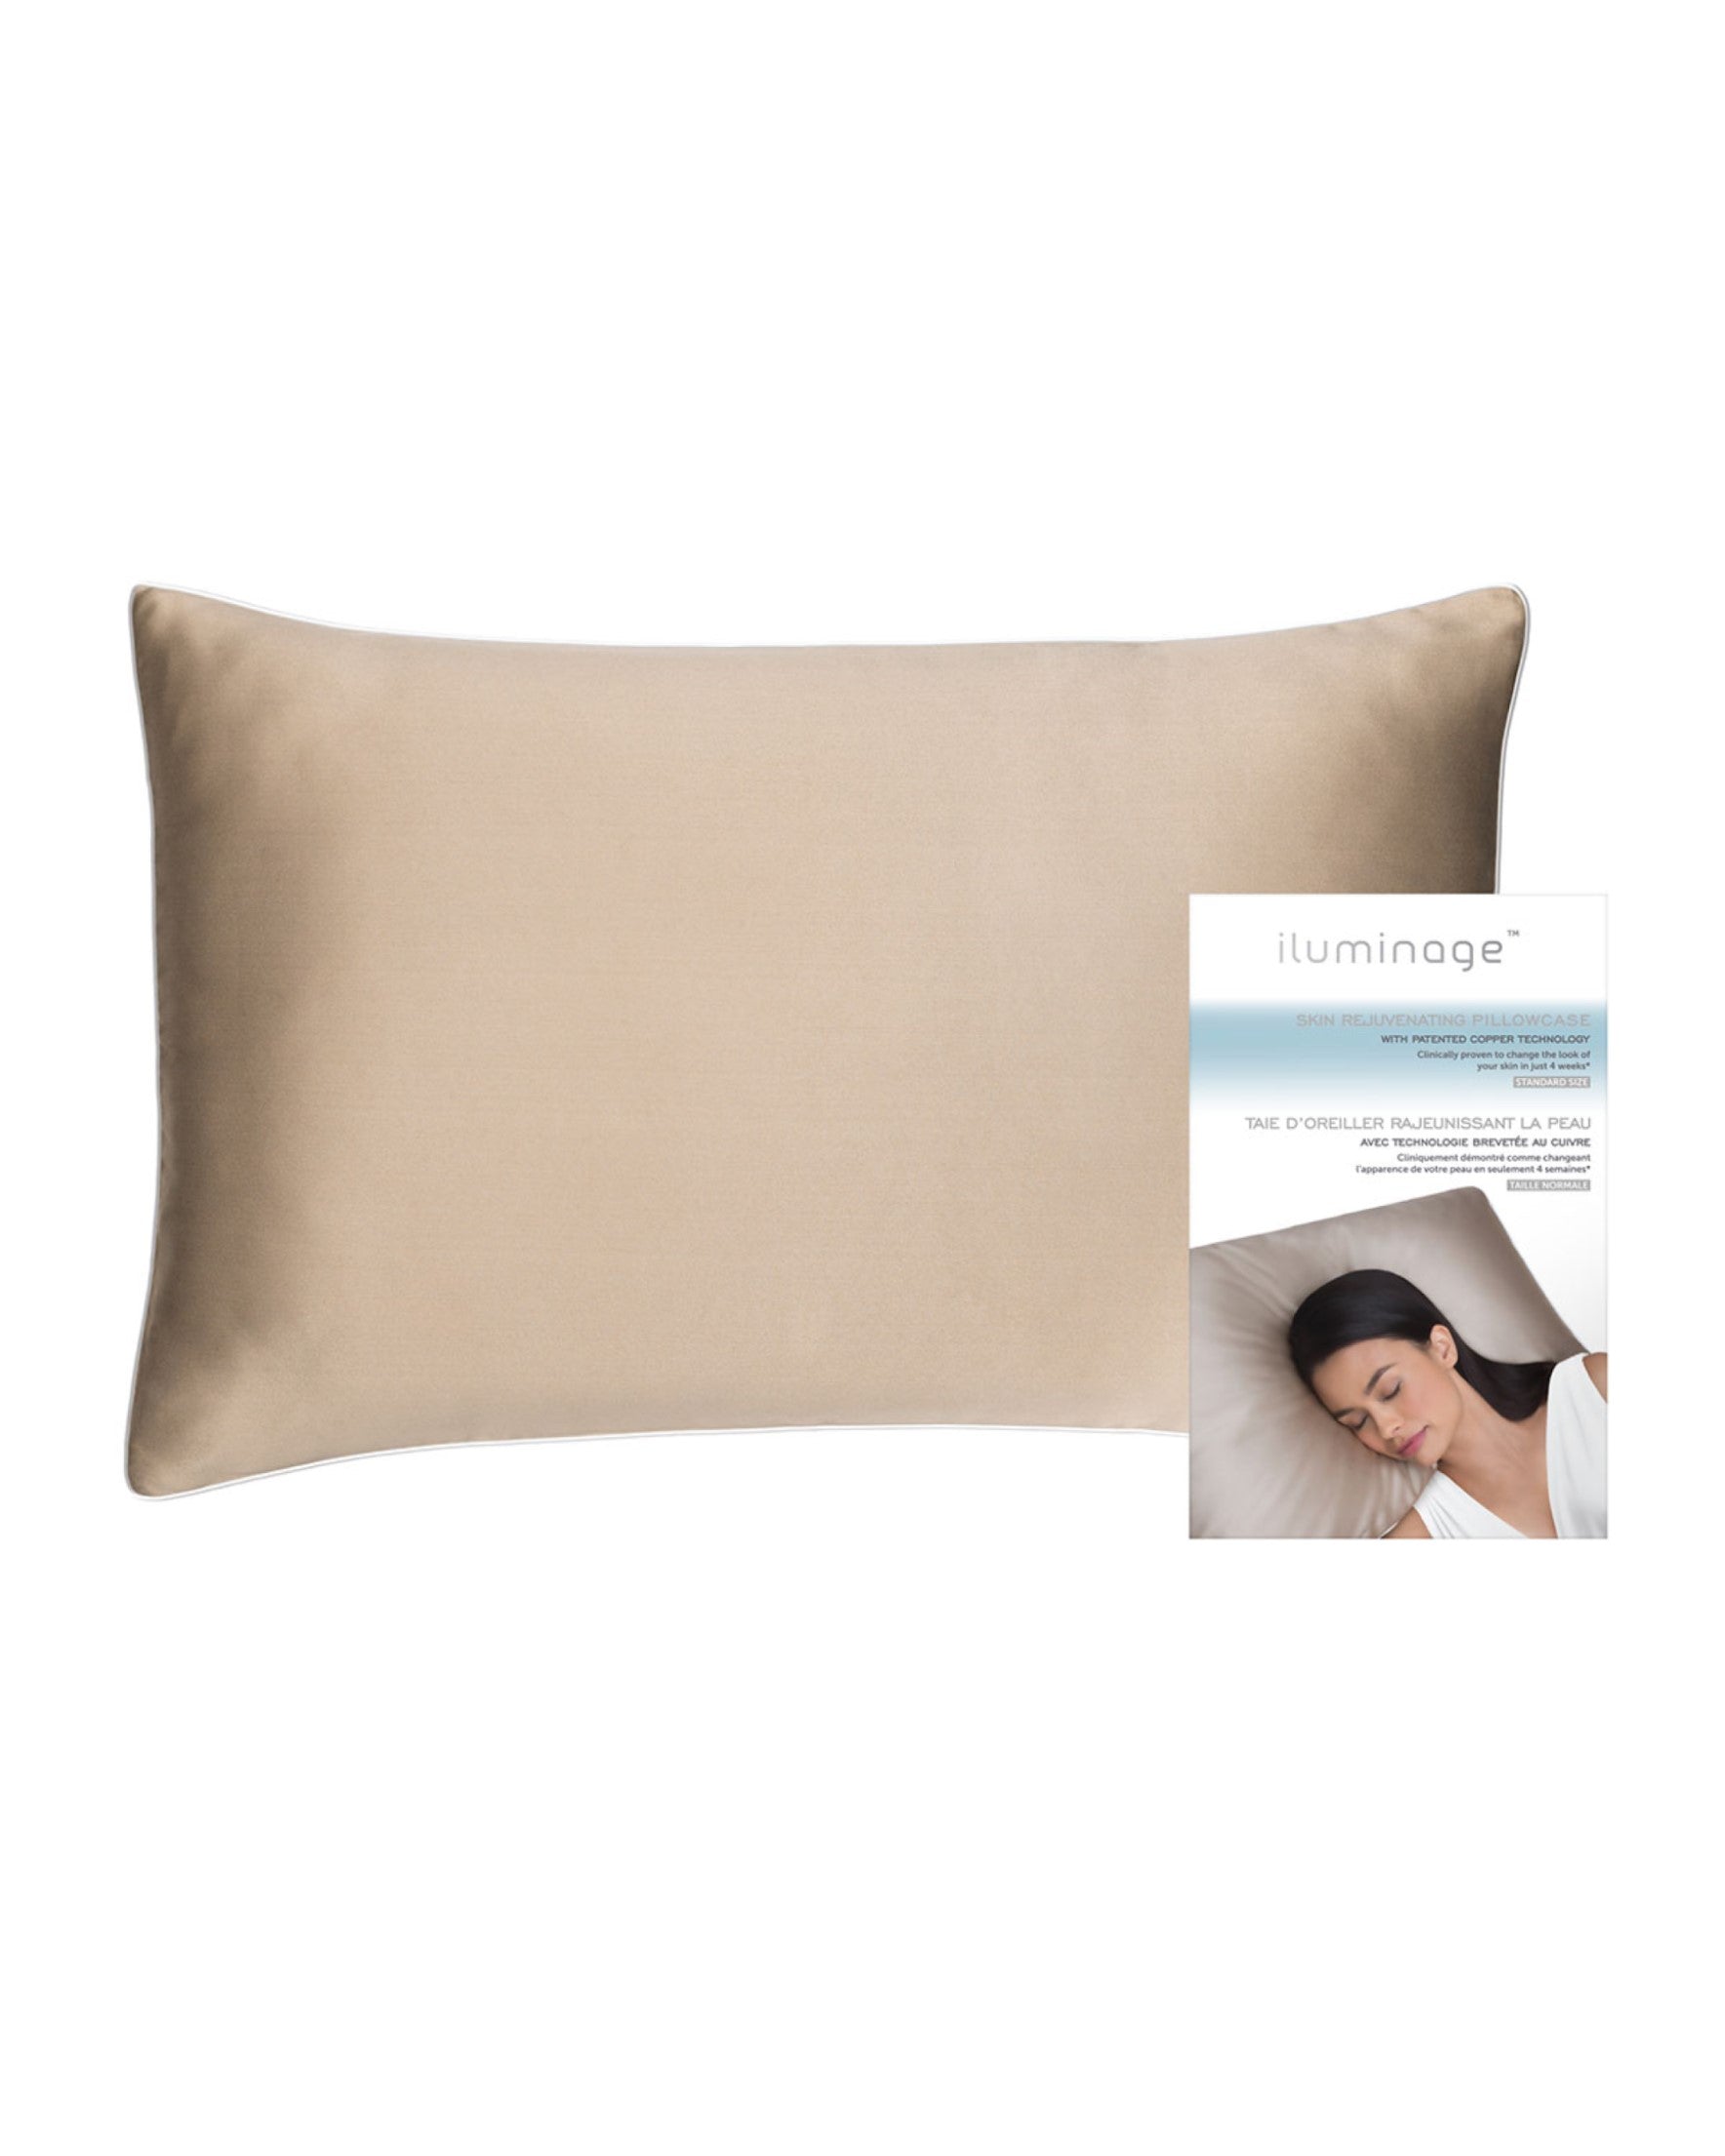 iluminage Skin Rejuvenating Pillowcase Duo (2 Pillow Set) - 25% Value